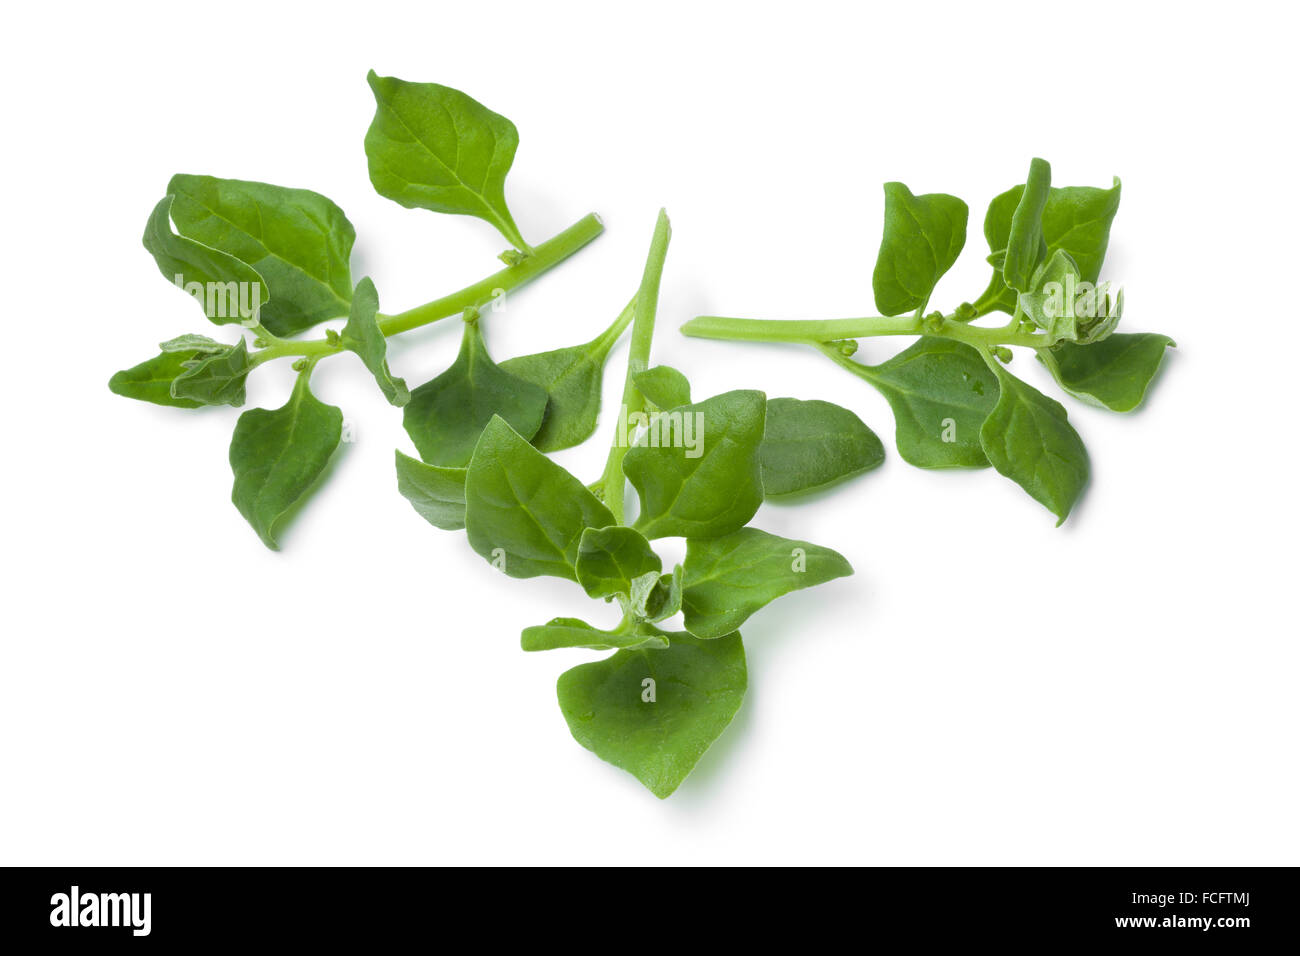 Nuova Zelanda spinaci foglie su sfondo bianco Foto Stock